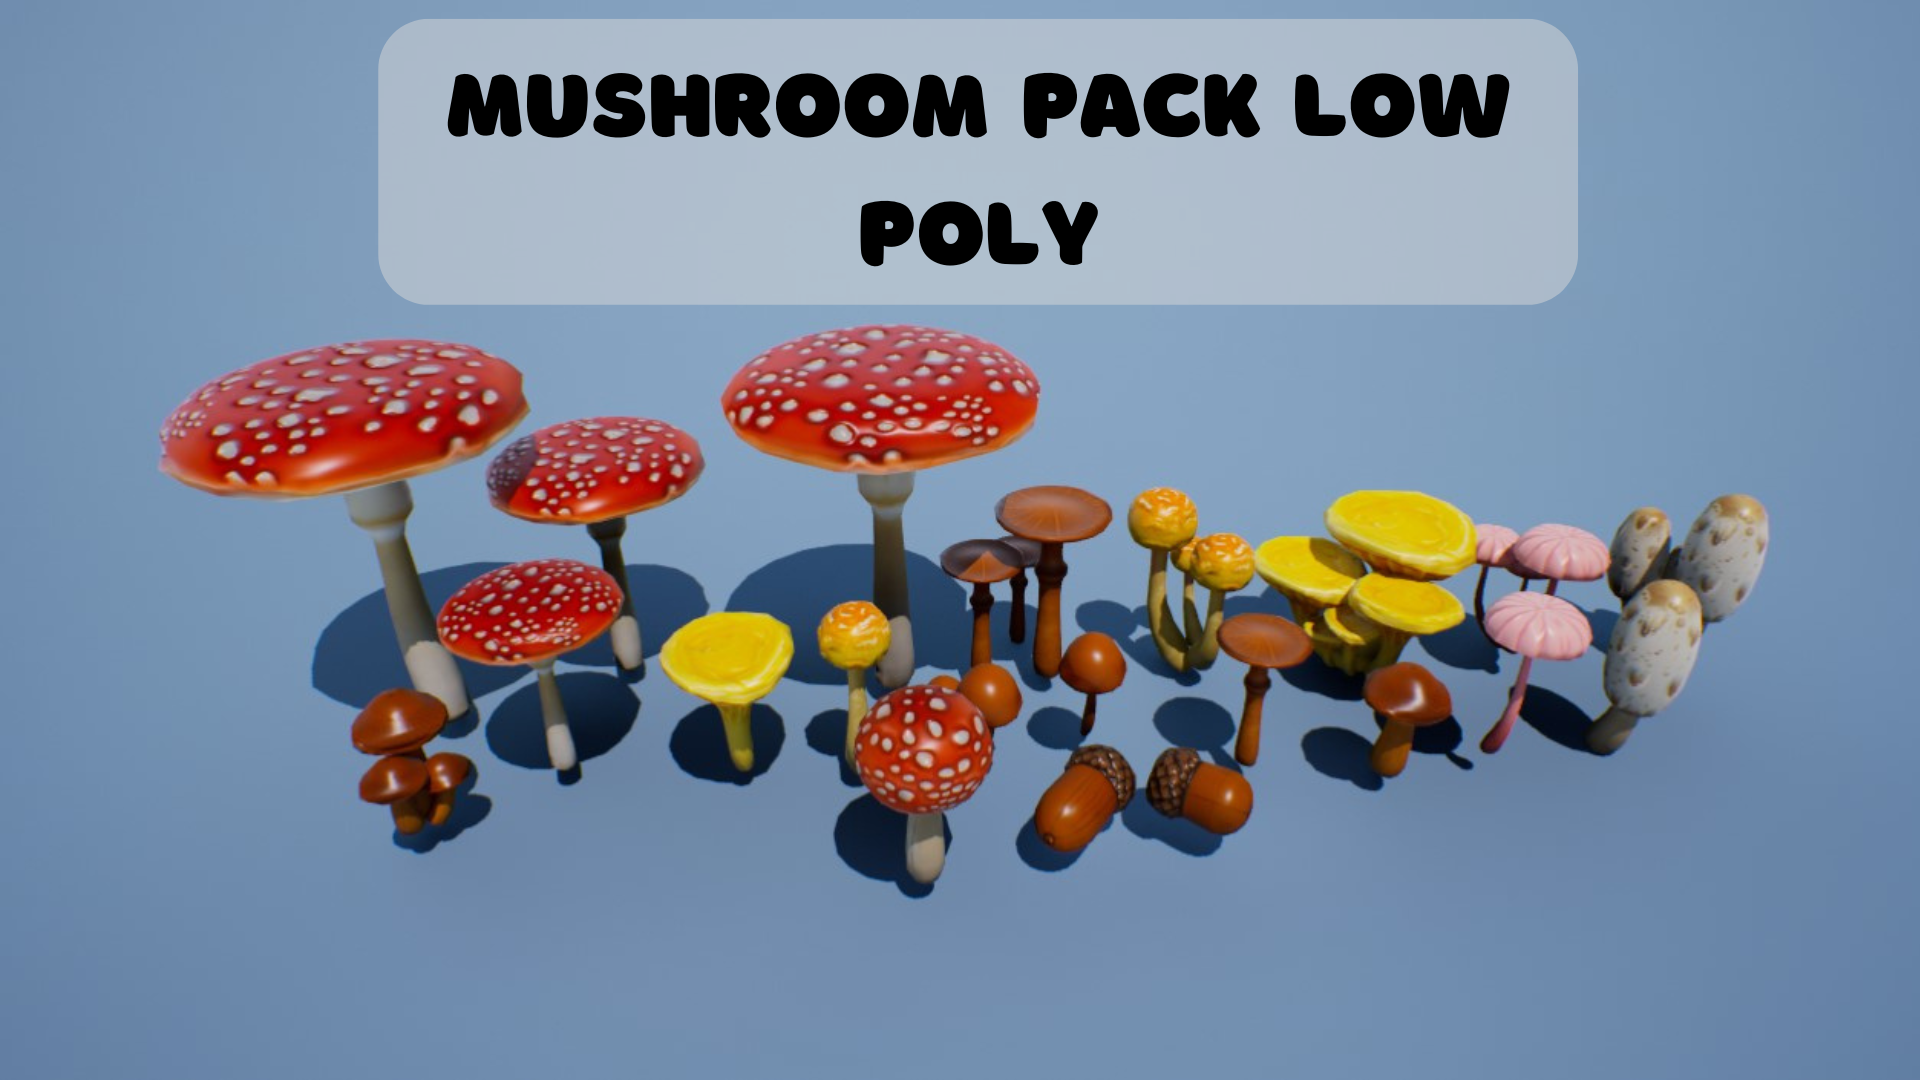 Mushroom Pack Low Poly